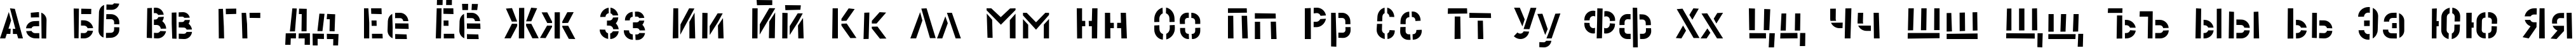 Пример написания русского алфавита шрифтом Cliche